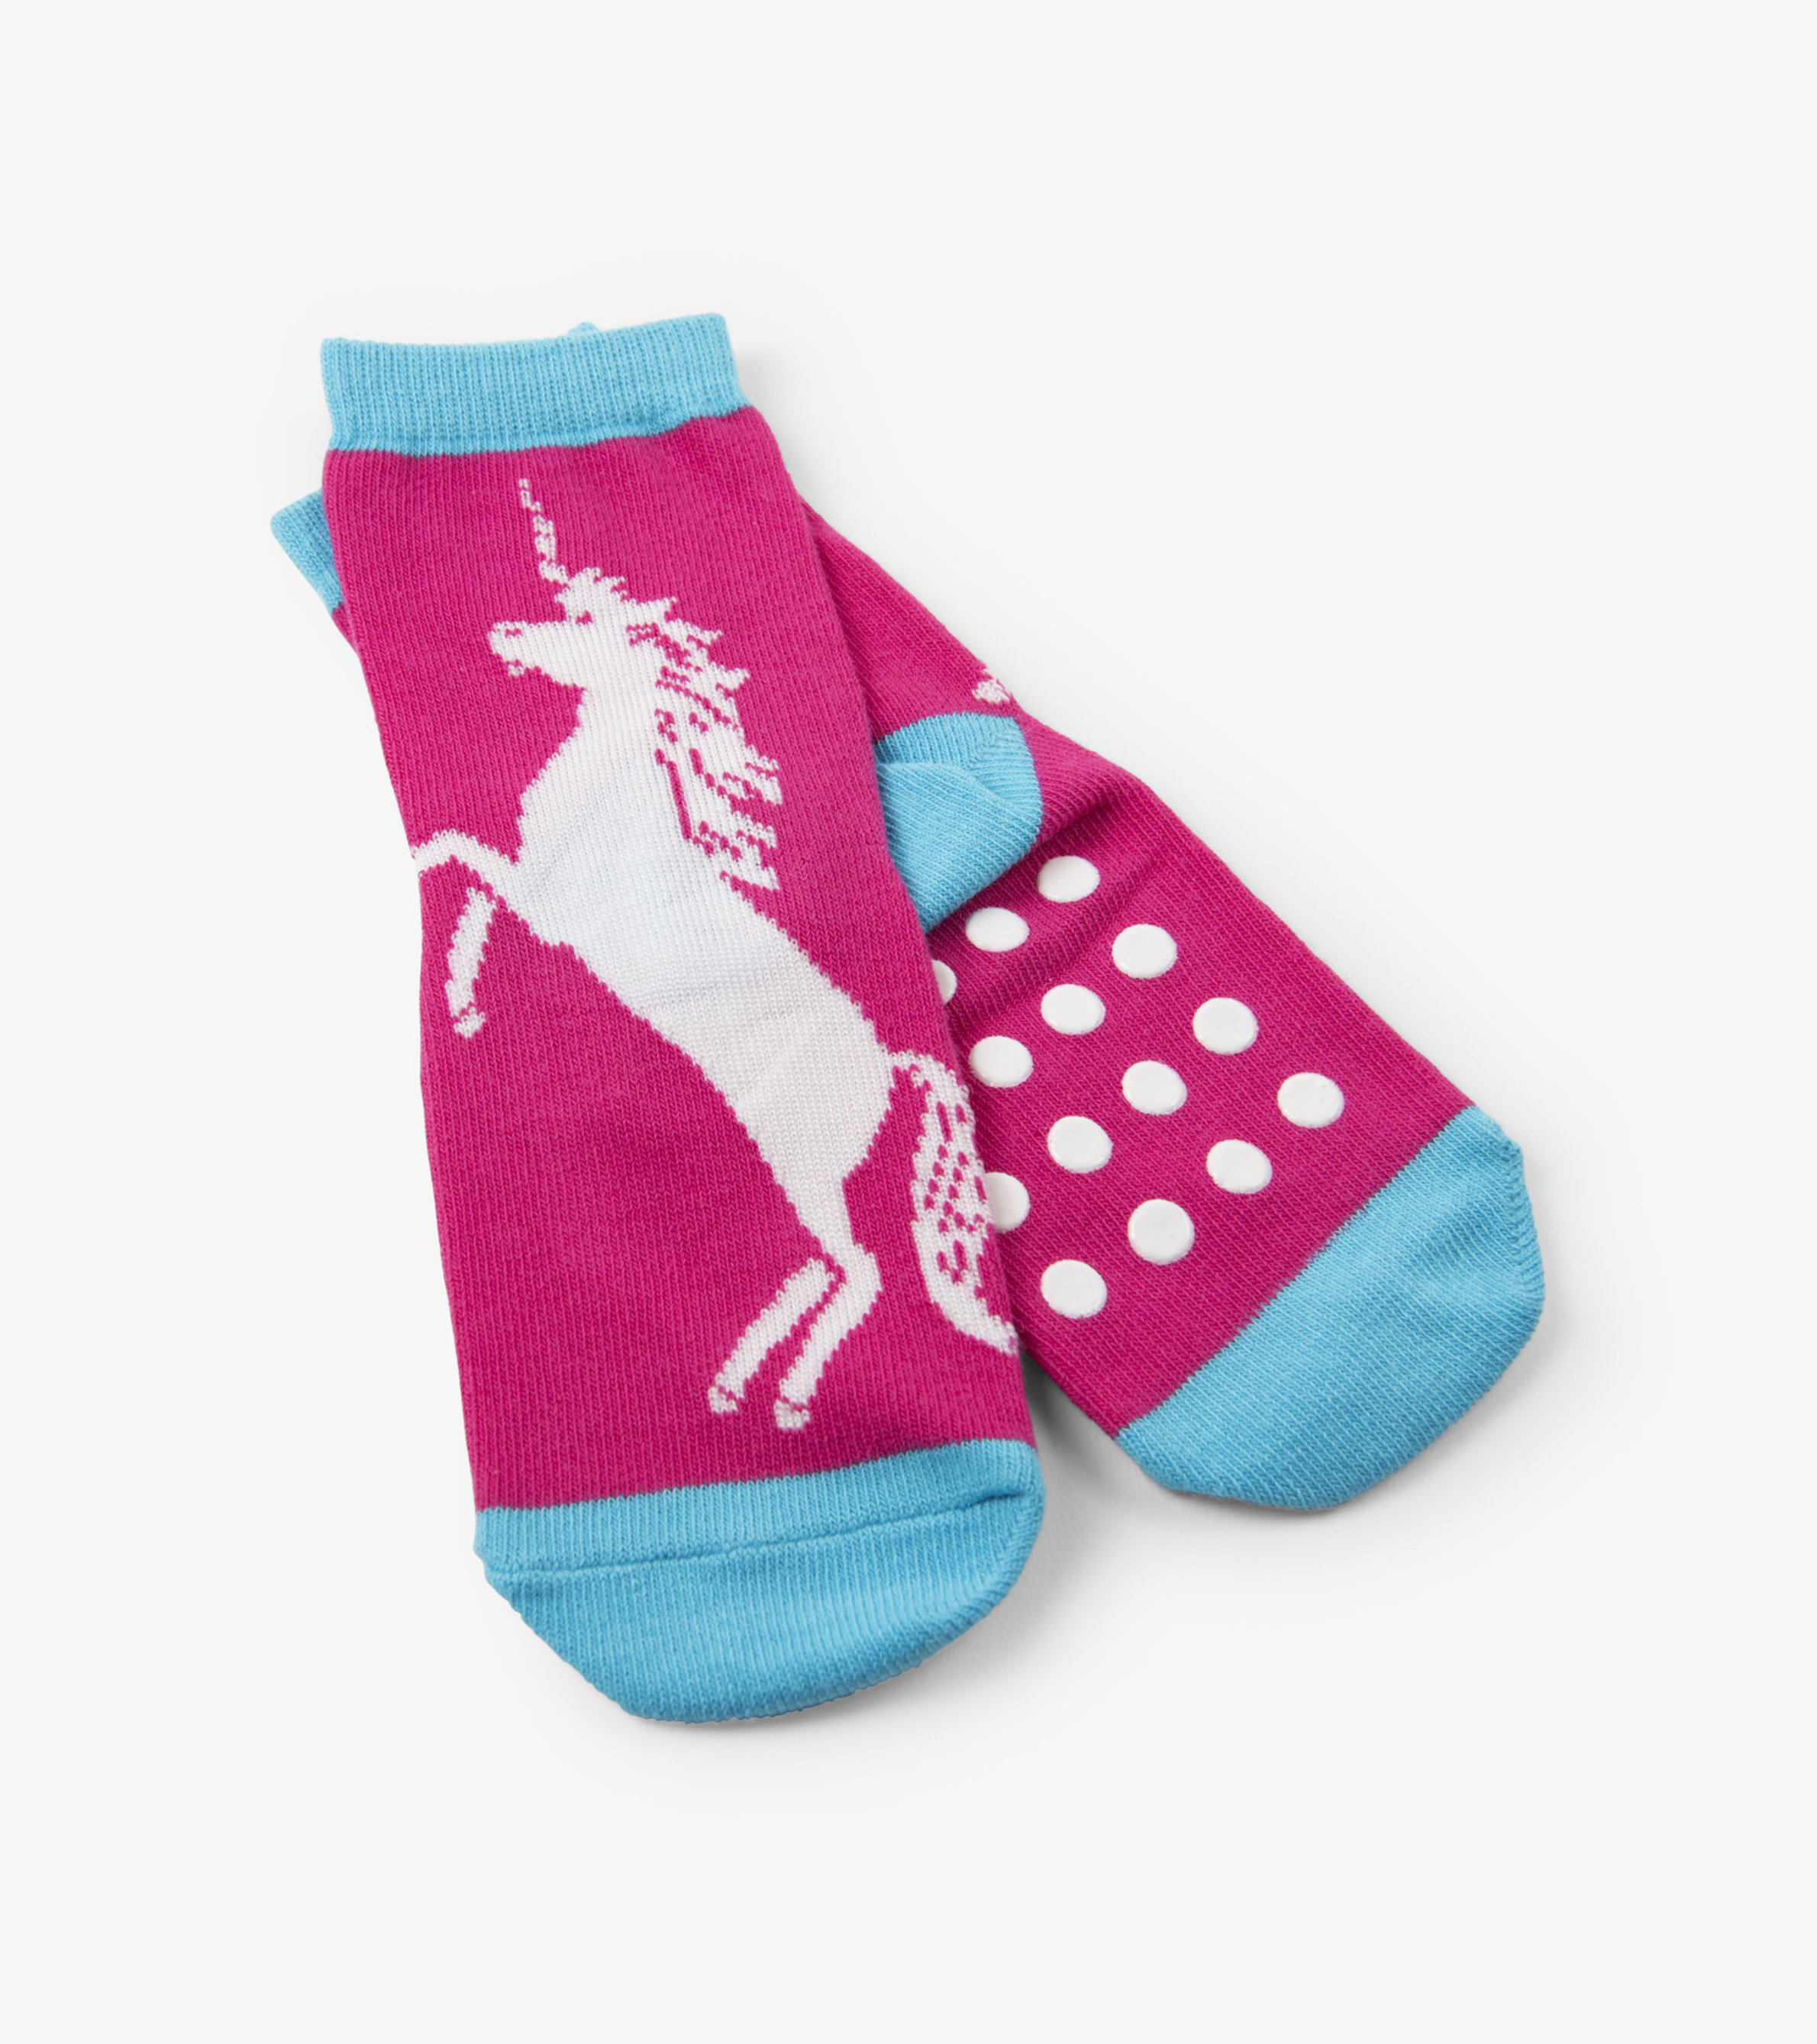 Hatley Glow Unicorn Socks - Kids | Pink